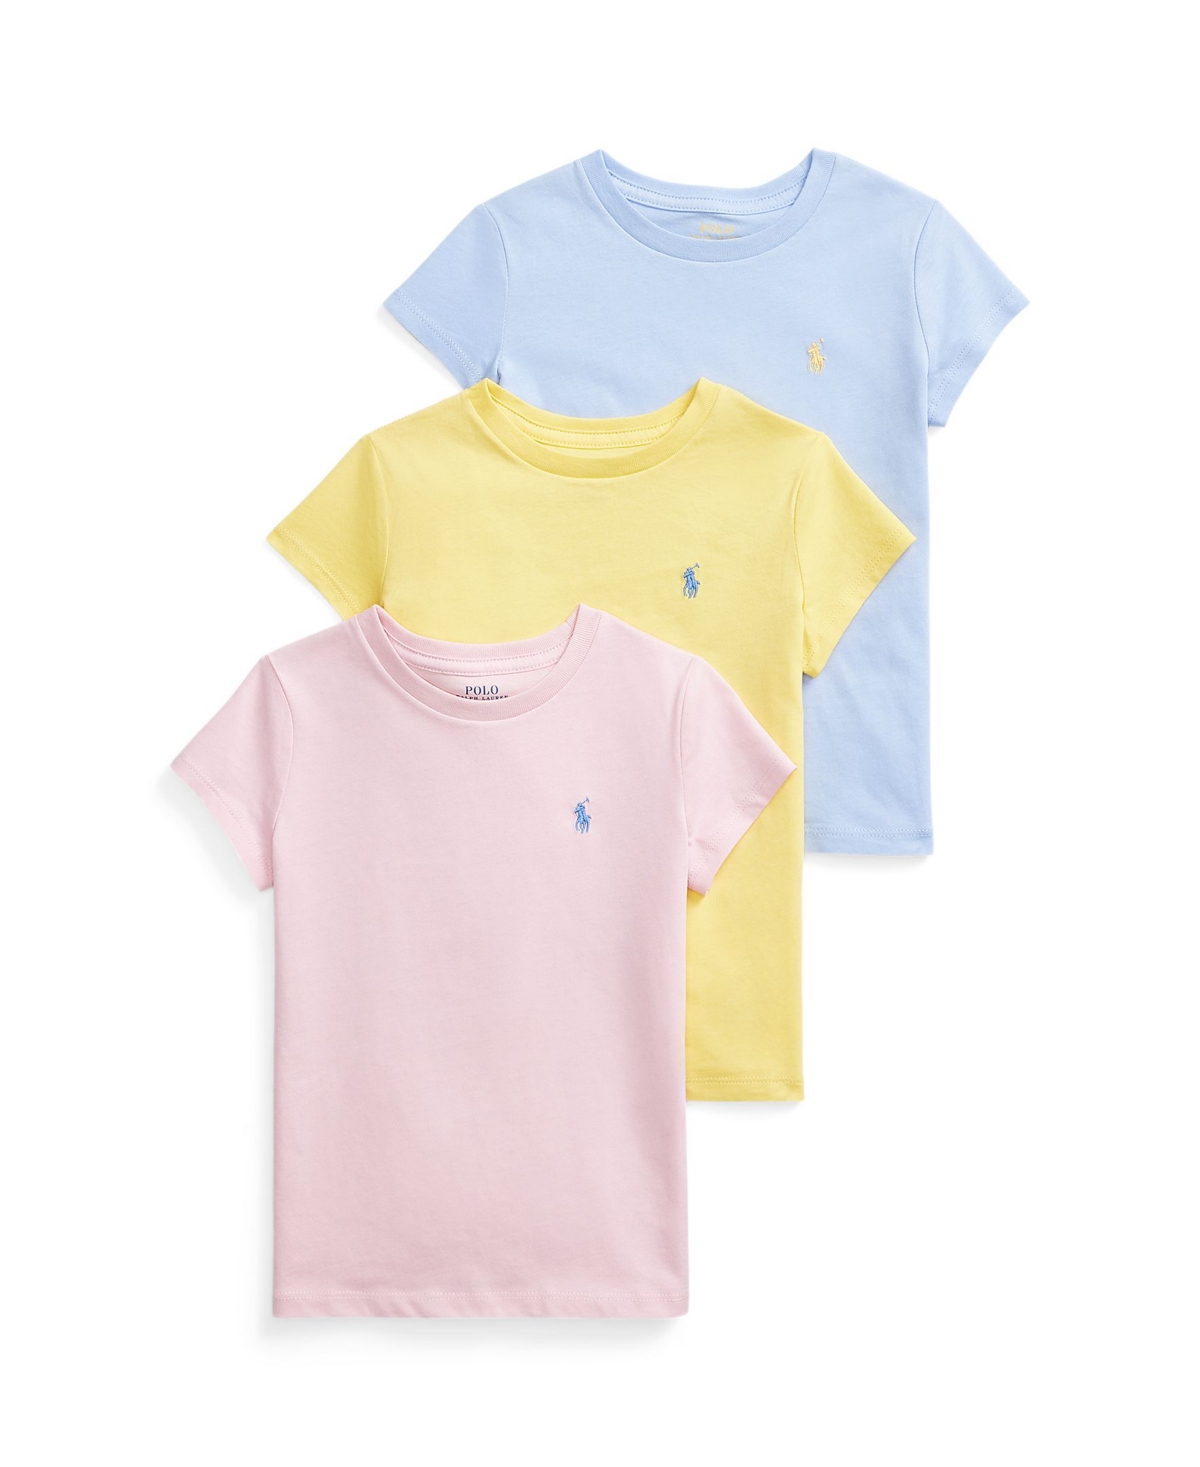 Polo Ralph Lauren Kids' Toddler And Little Girls Cotton Jersey Crewneck T-shirts, Pack Of 3 In Garpink,oasyell,bluhyac